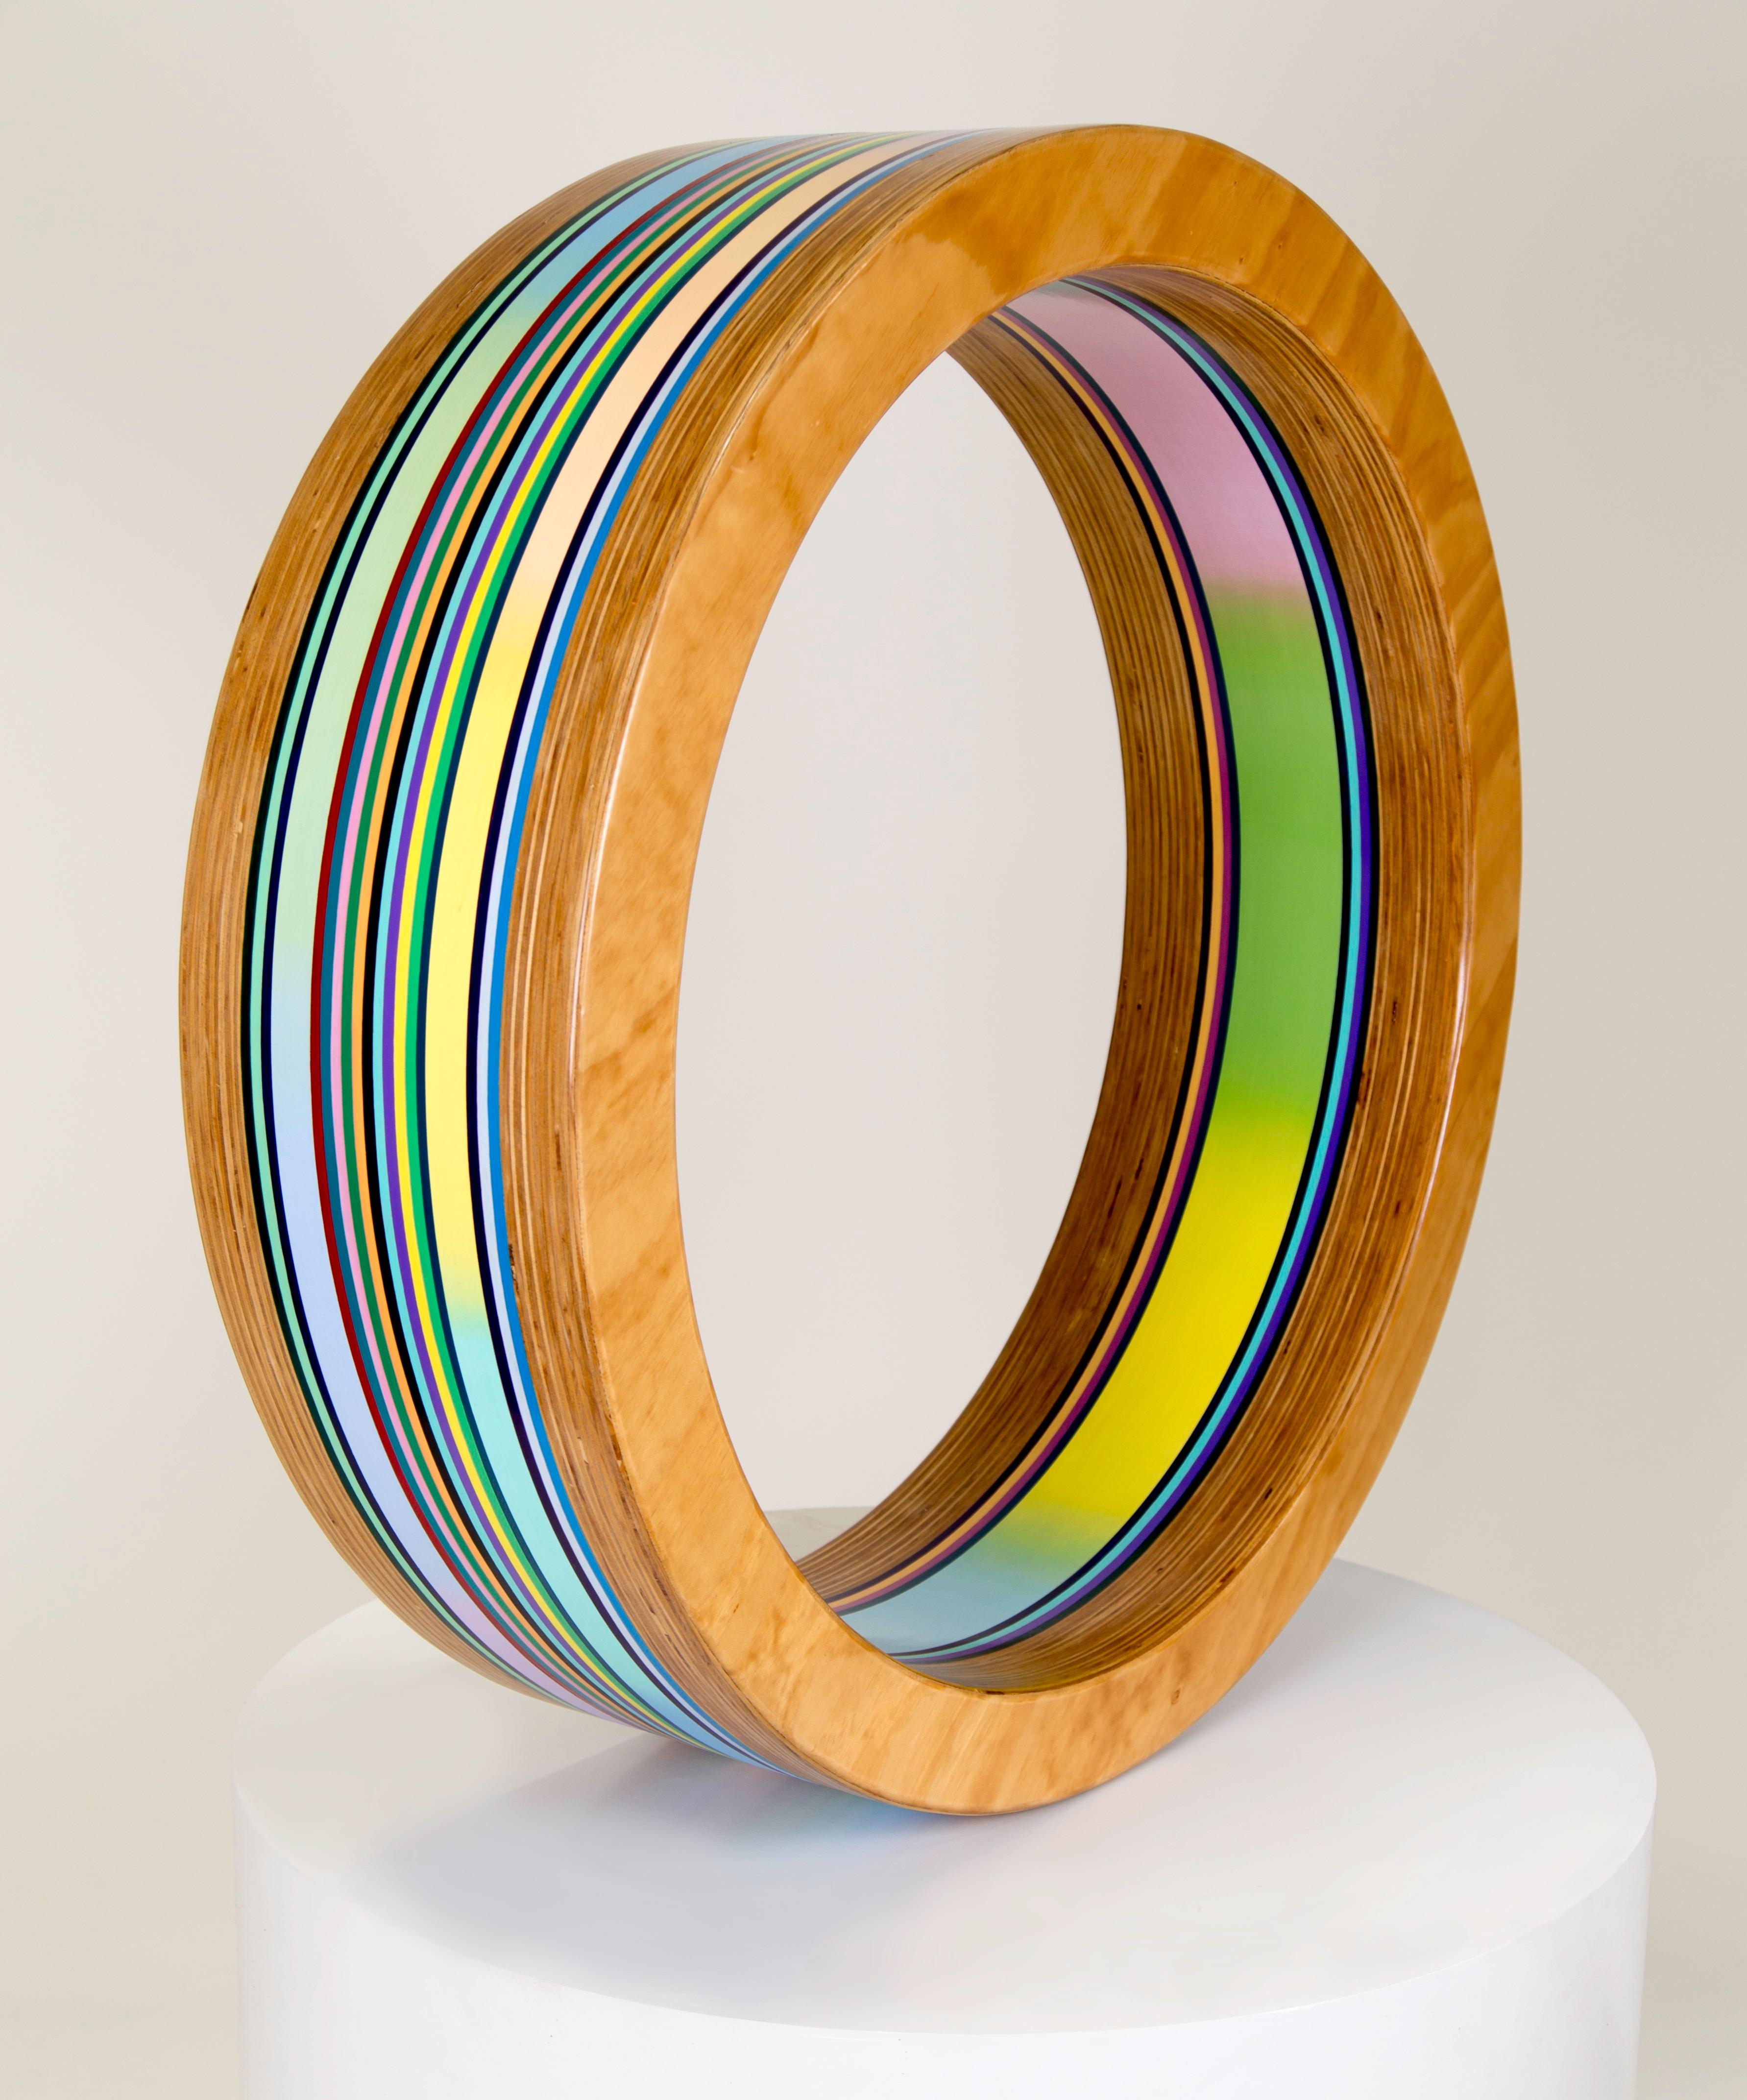 Mark Knoerzer Abstract Sculpture - Ring